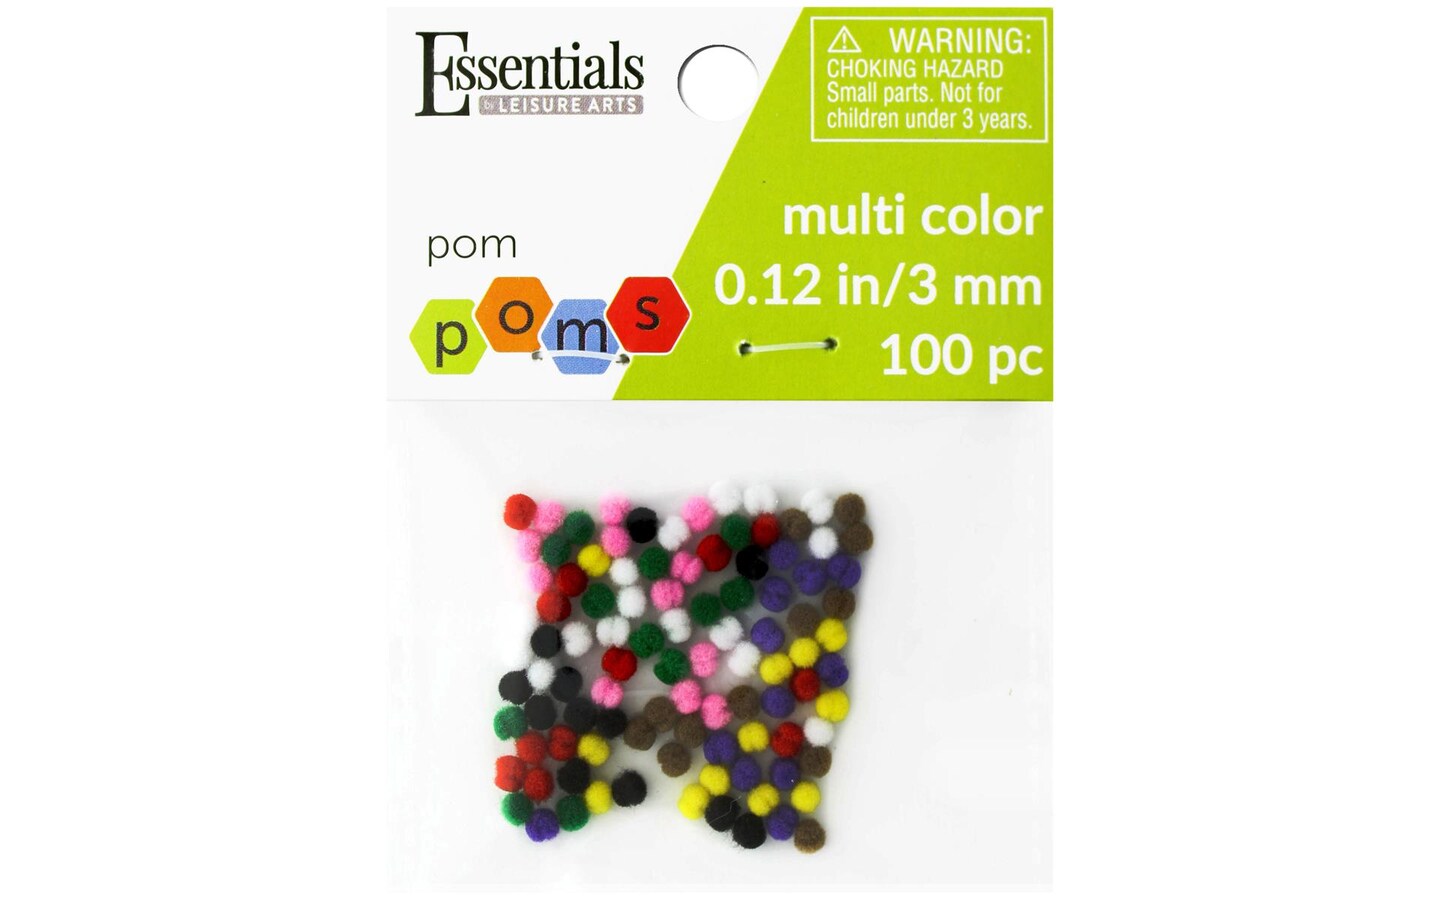  Essentials by Leisure Arts Pom Poms - Multi-Colored -1